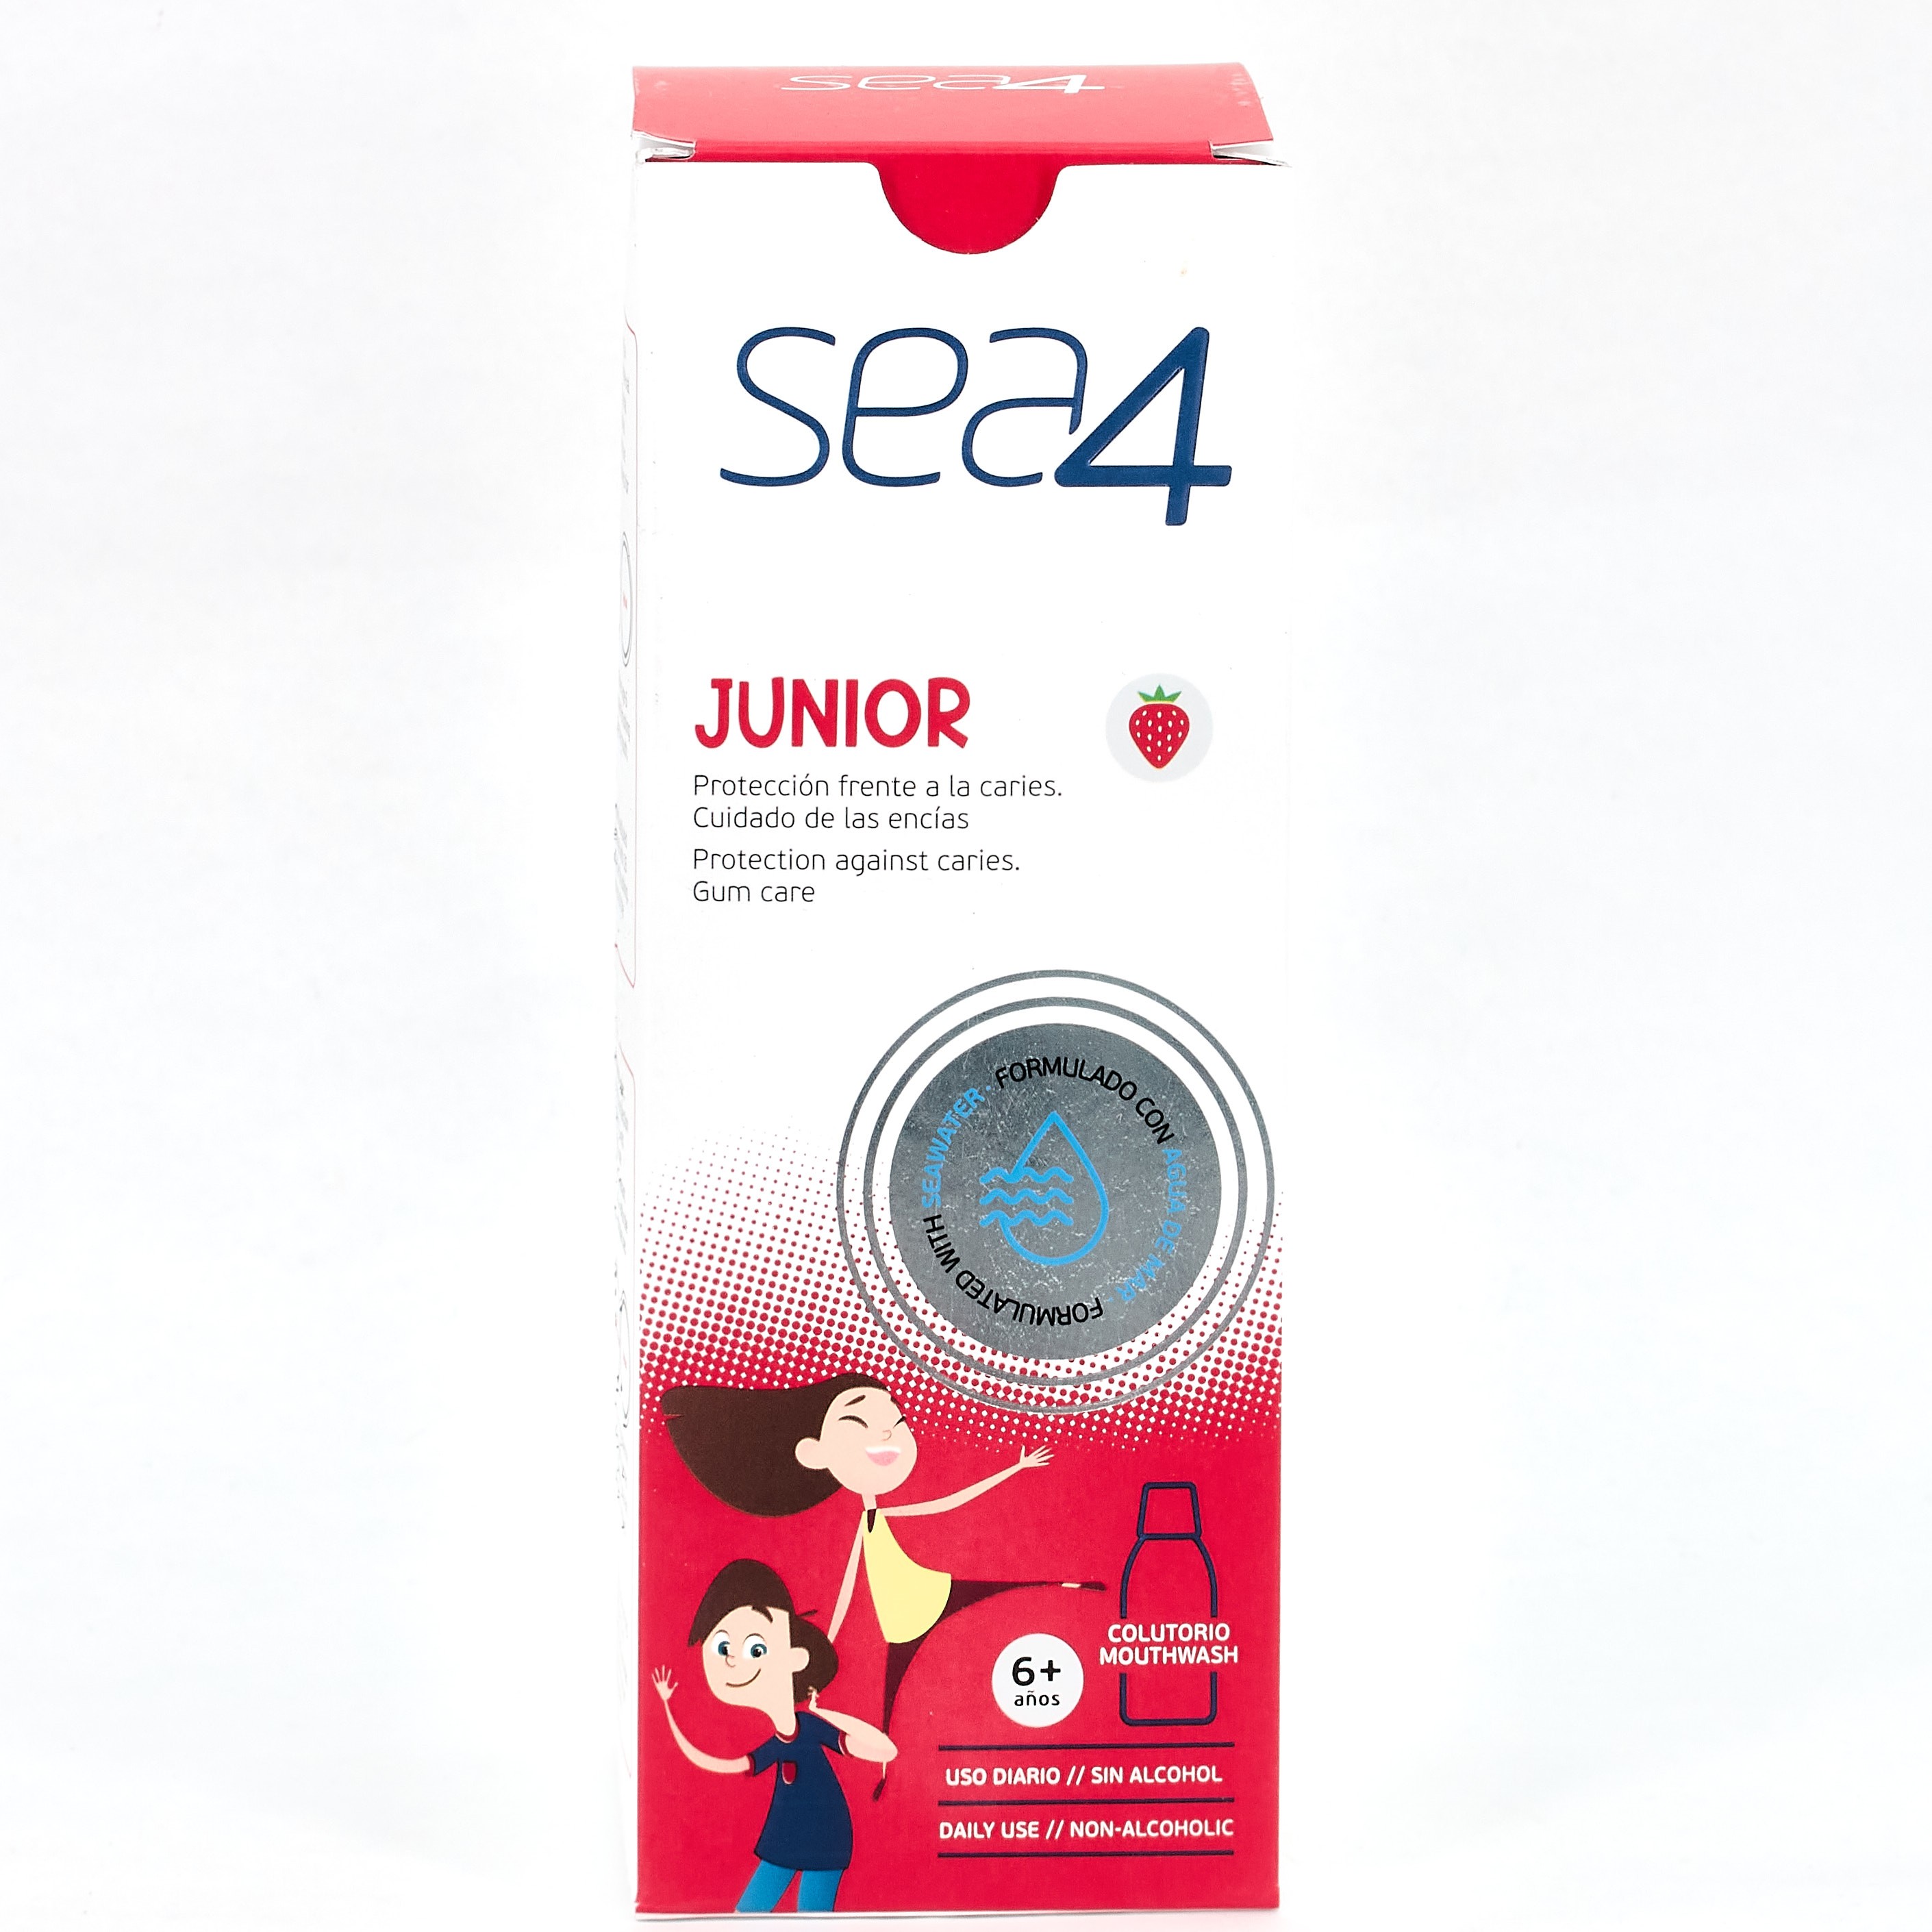 SEA4 Colutorio Junior, 500ml.